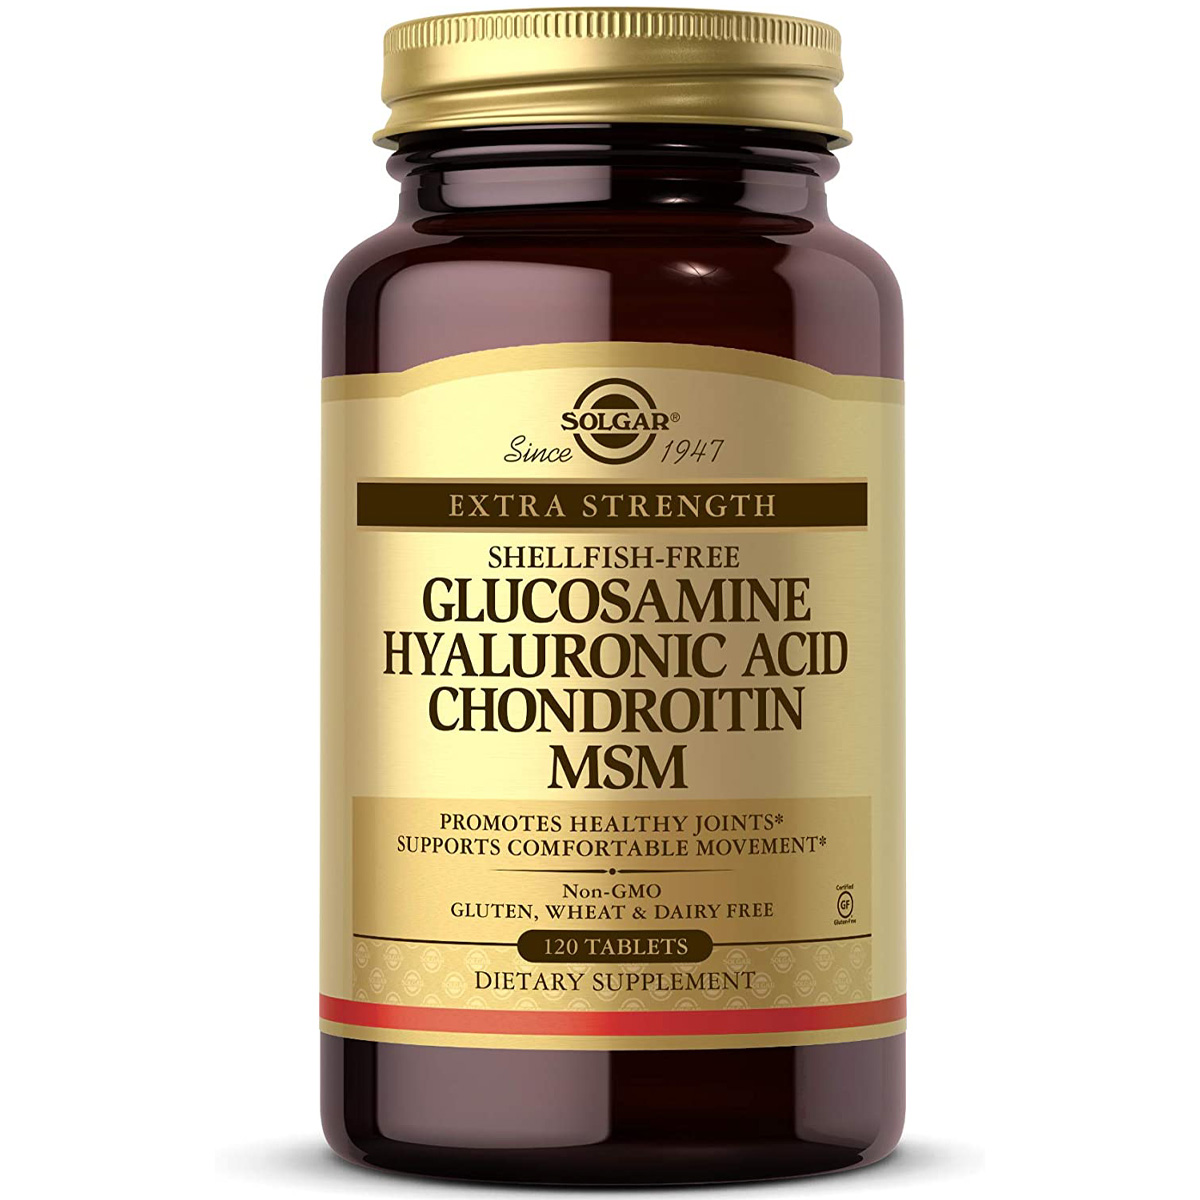 Solgar Glucosamine Hyaluronic Acid Chondroitin MSM (Shellfish-free), 120 Tablets